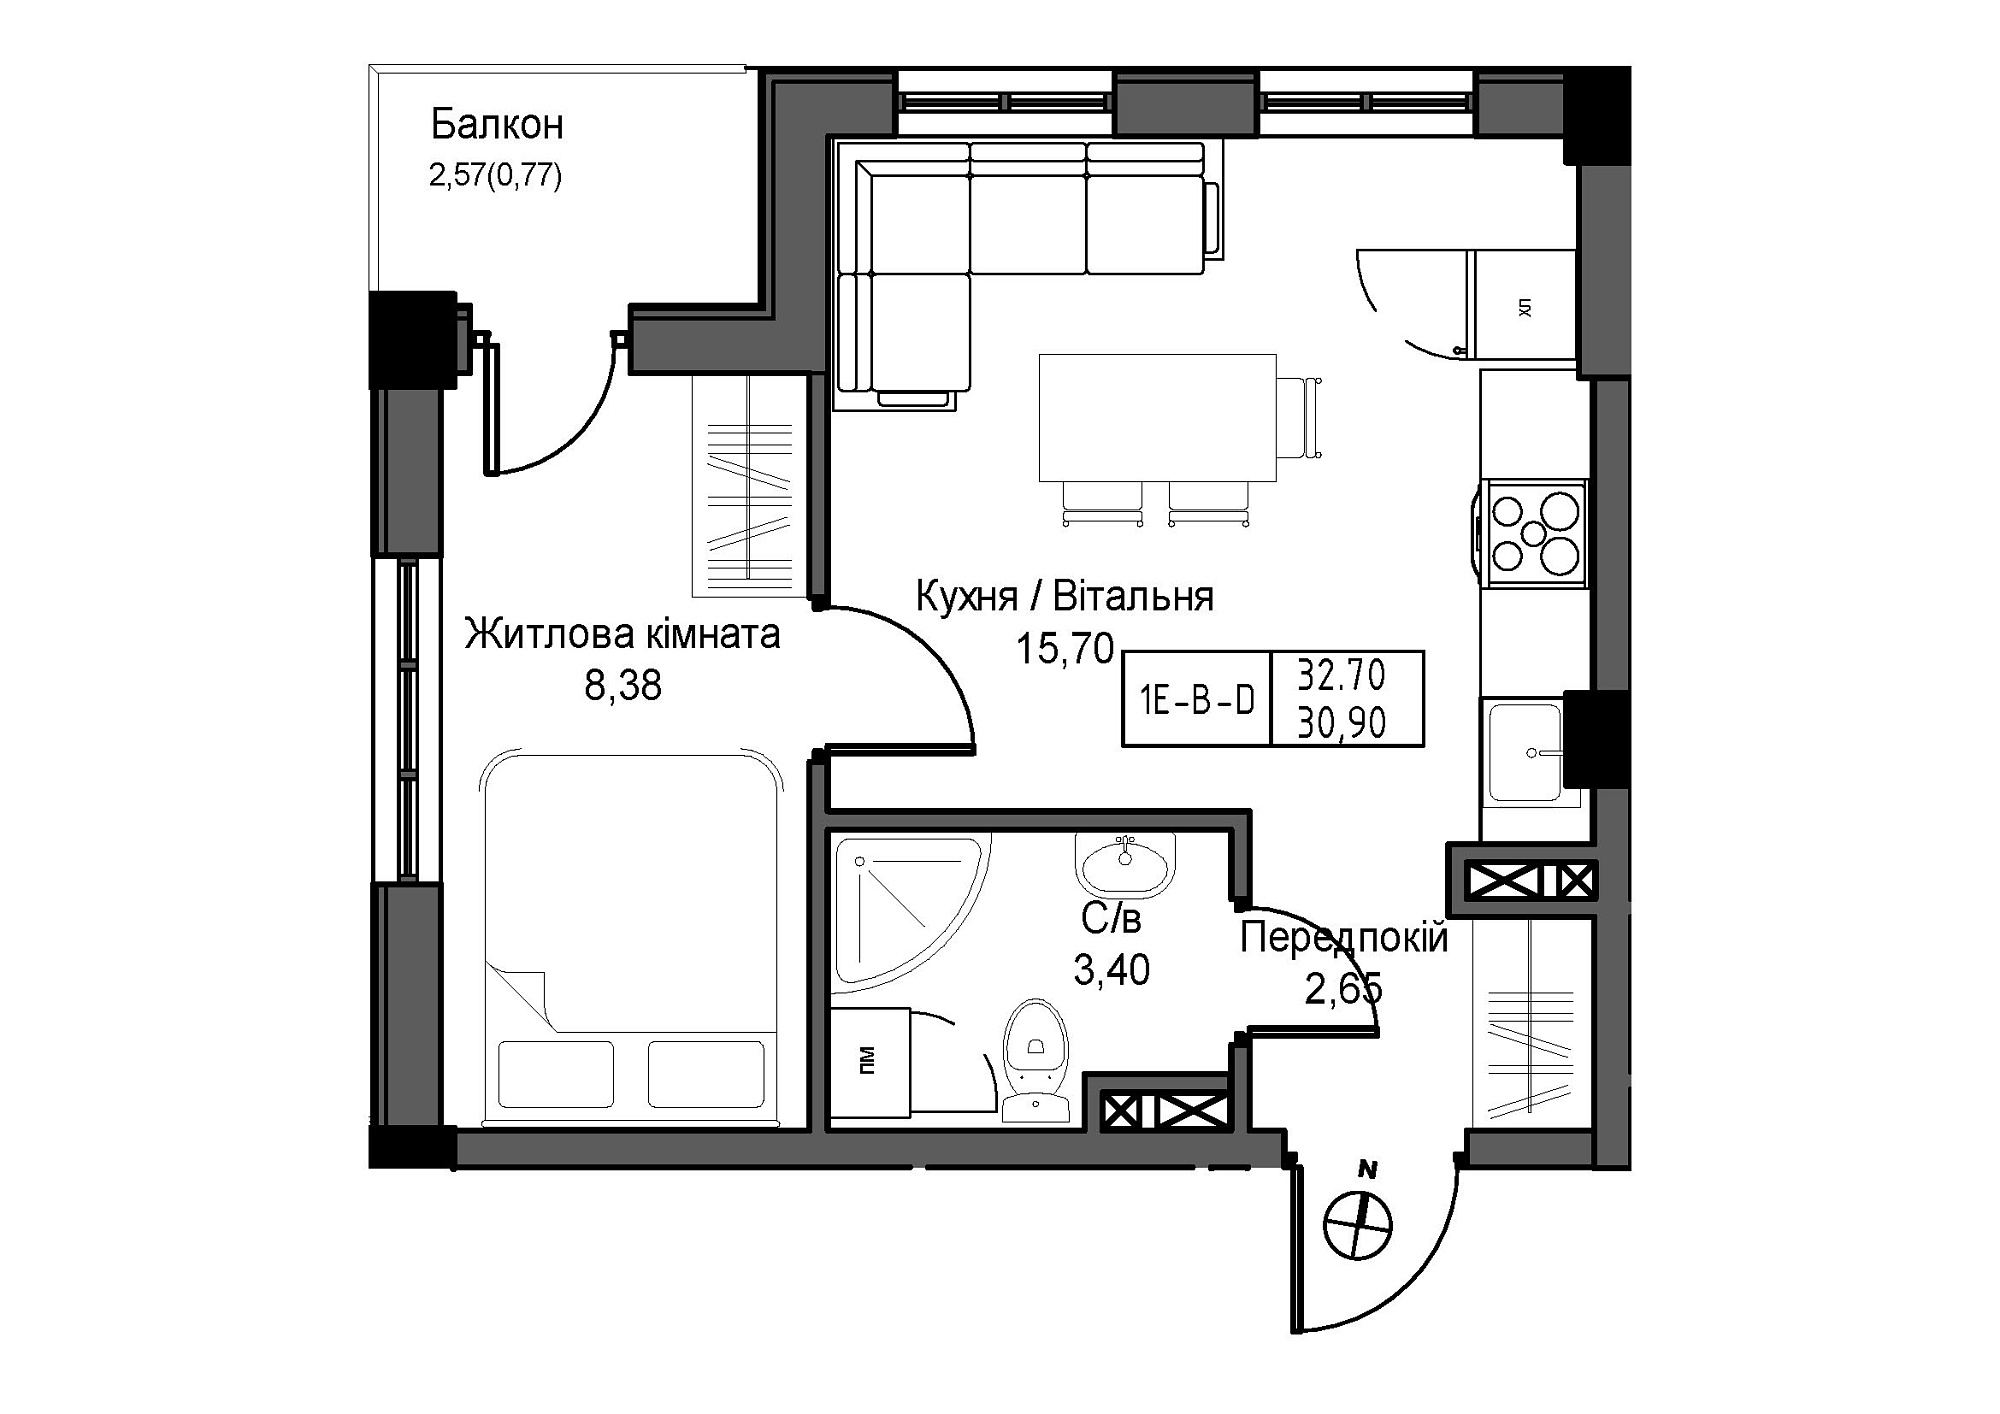 Planning 1-rm flats area 30.9m2, UM-007-09/0002.